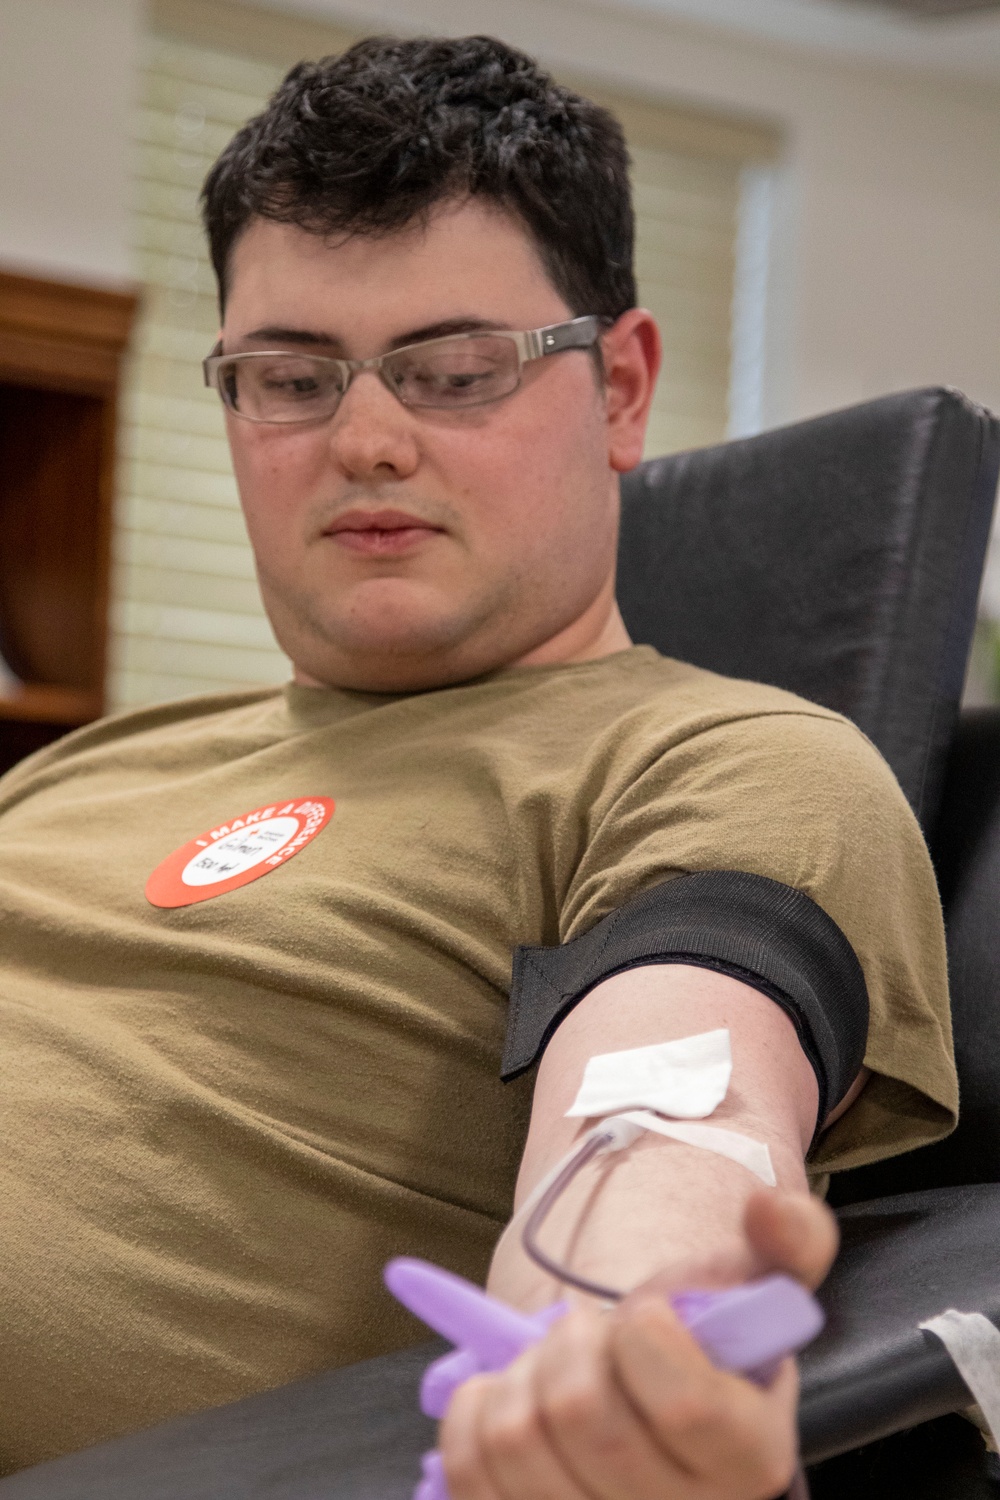 Warrior Brigade Soldier donates during Fort Drum BOSS blood drive.